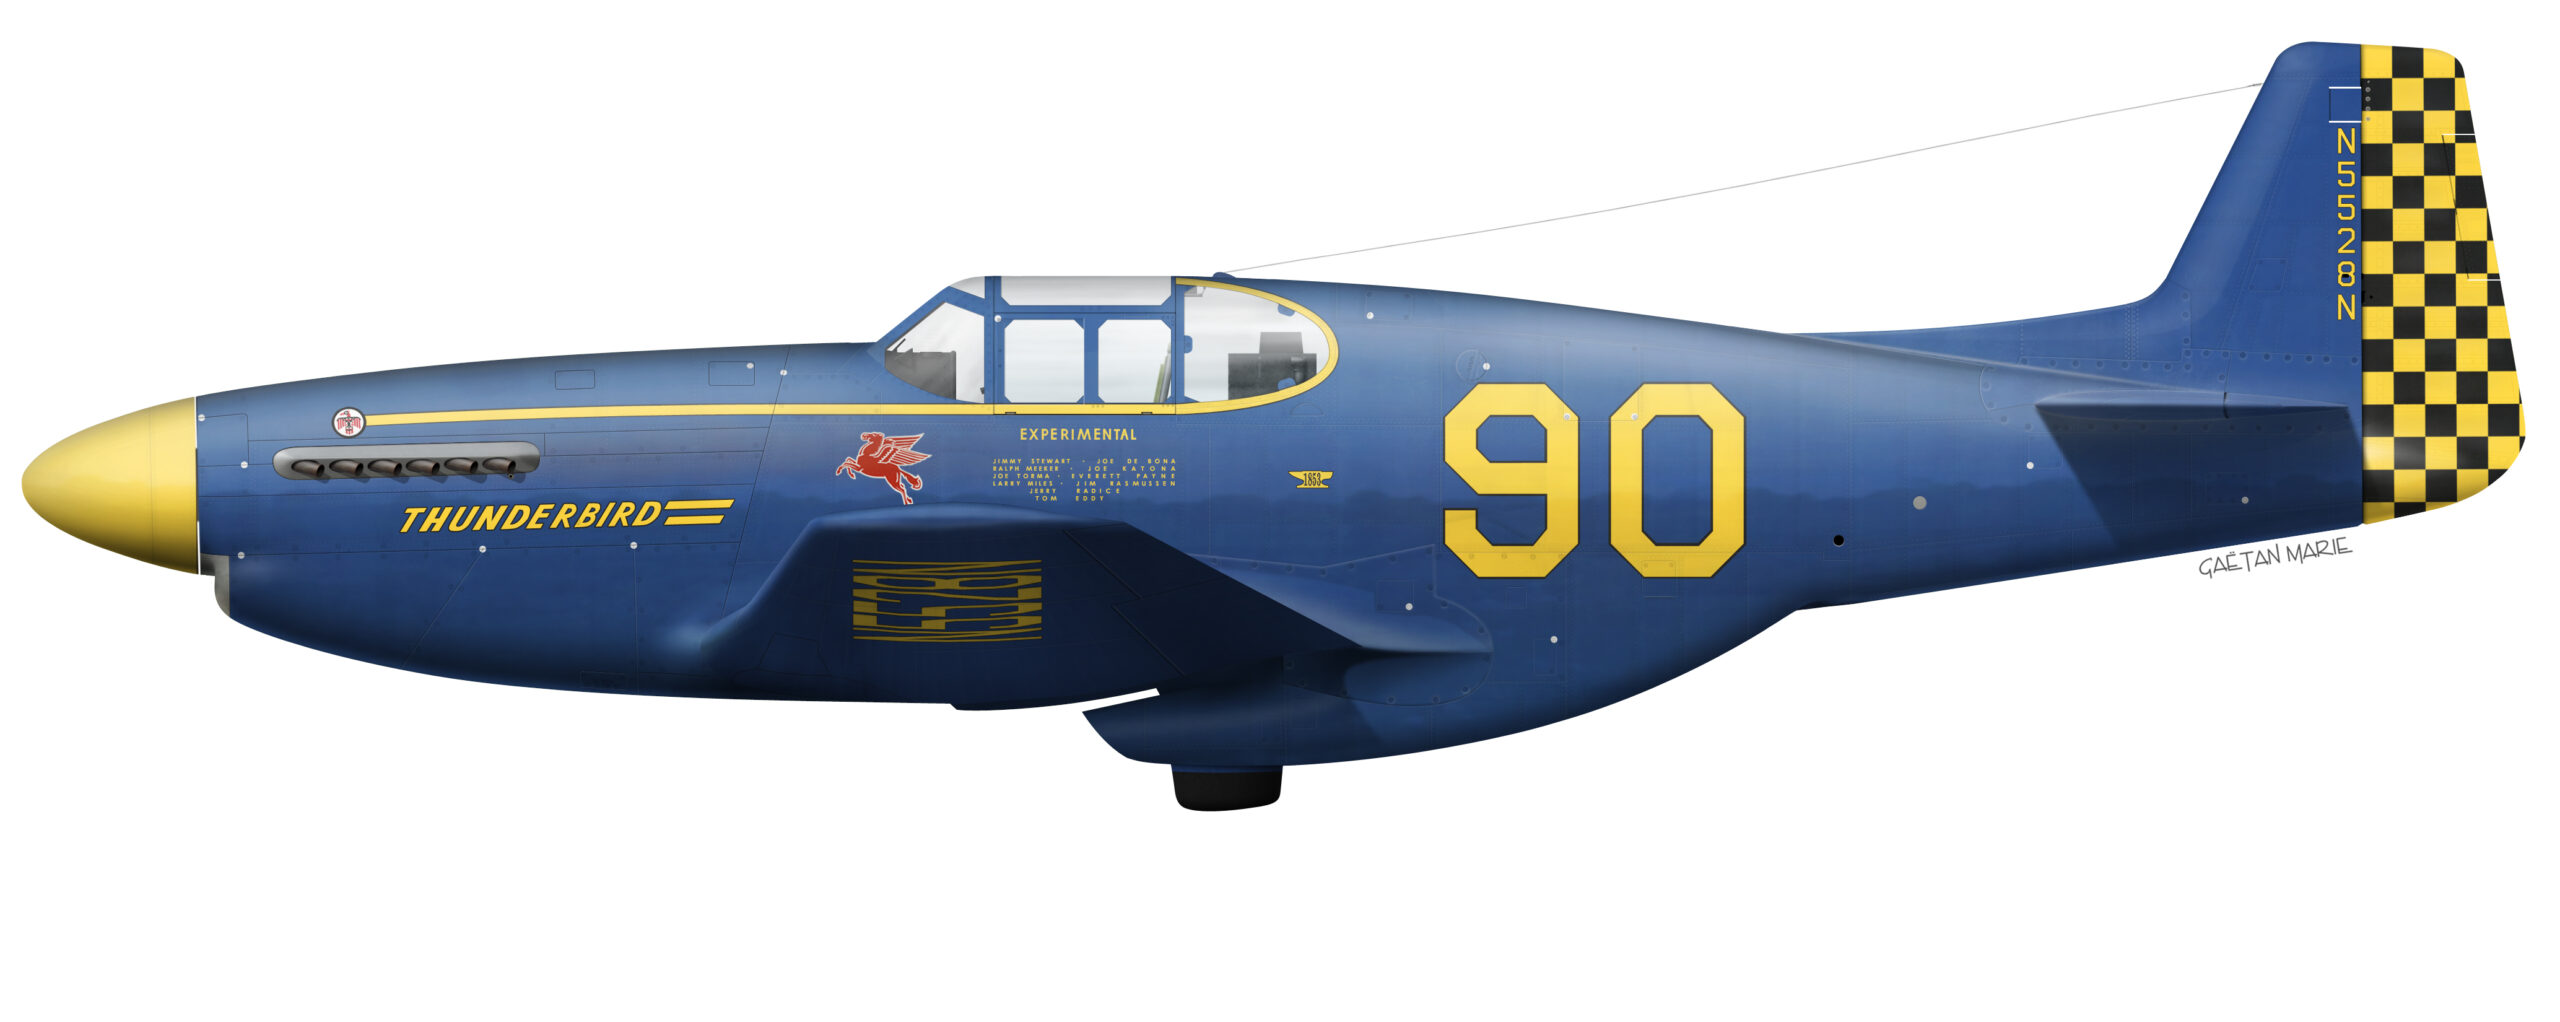 P-51C, N5528N, Thunderbird, 1949 Bendix Trophy Race